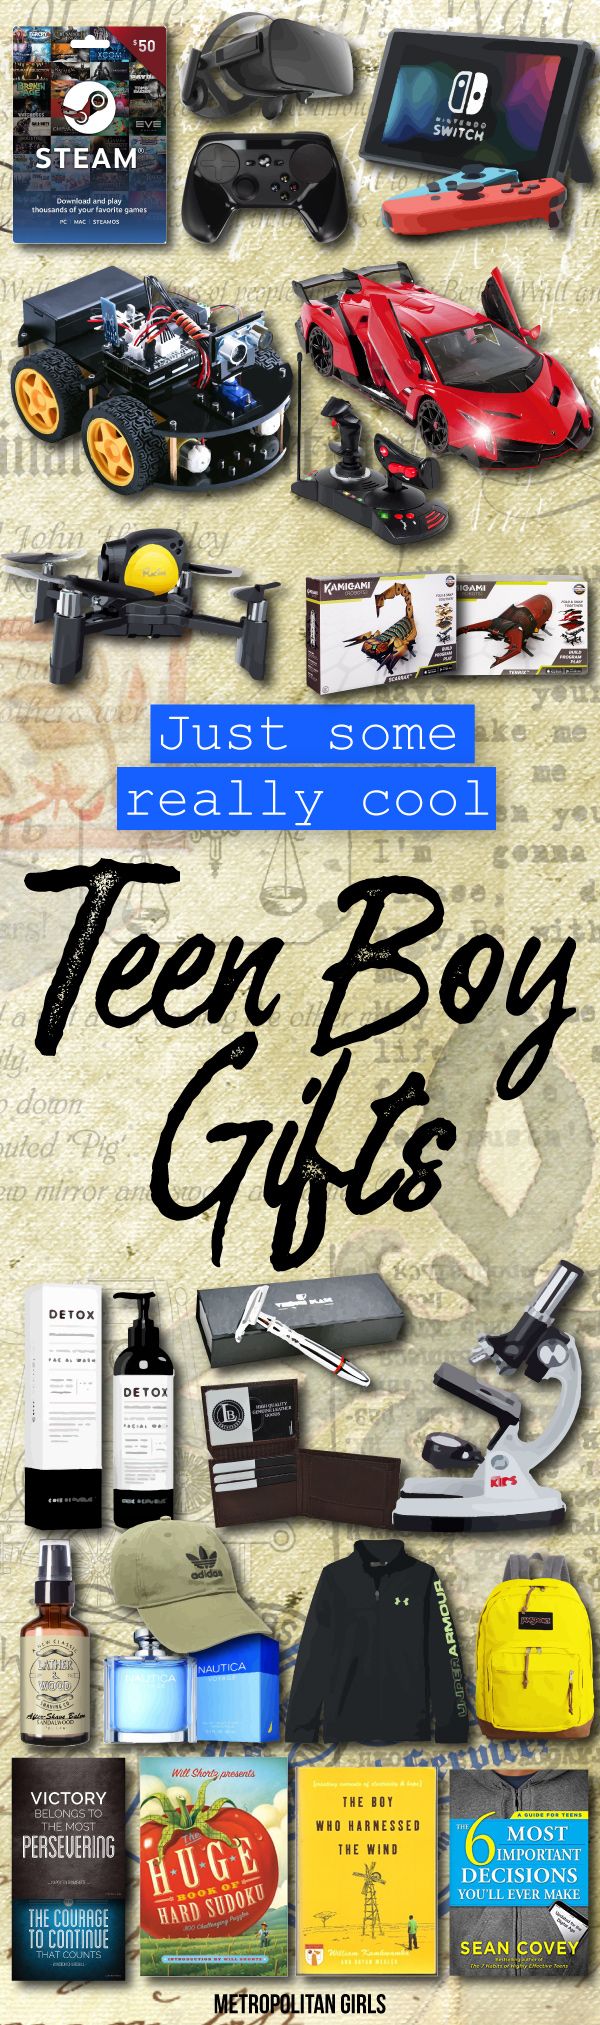 Teen Boy Gifts | Gift Ideas for Teen Boys 15-18 Year Old